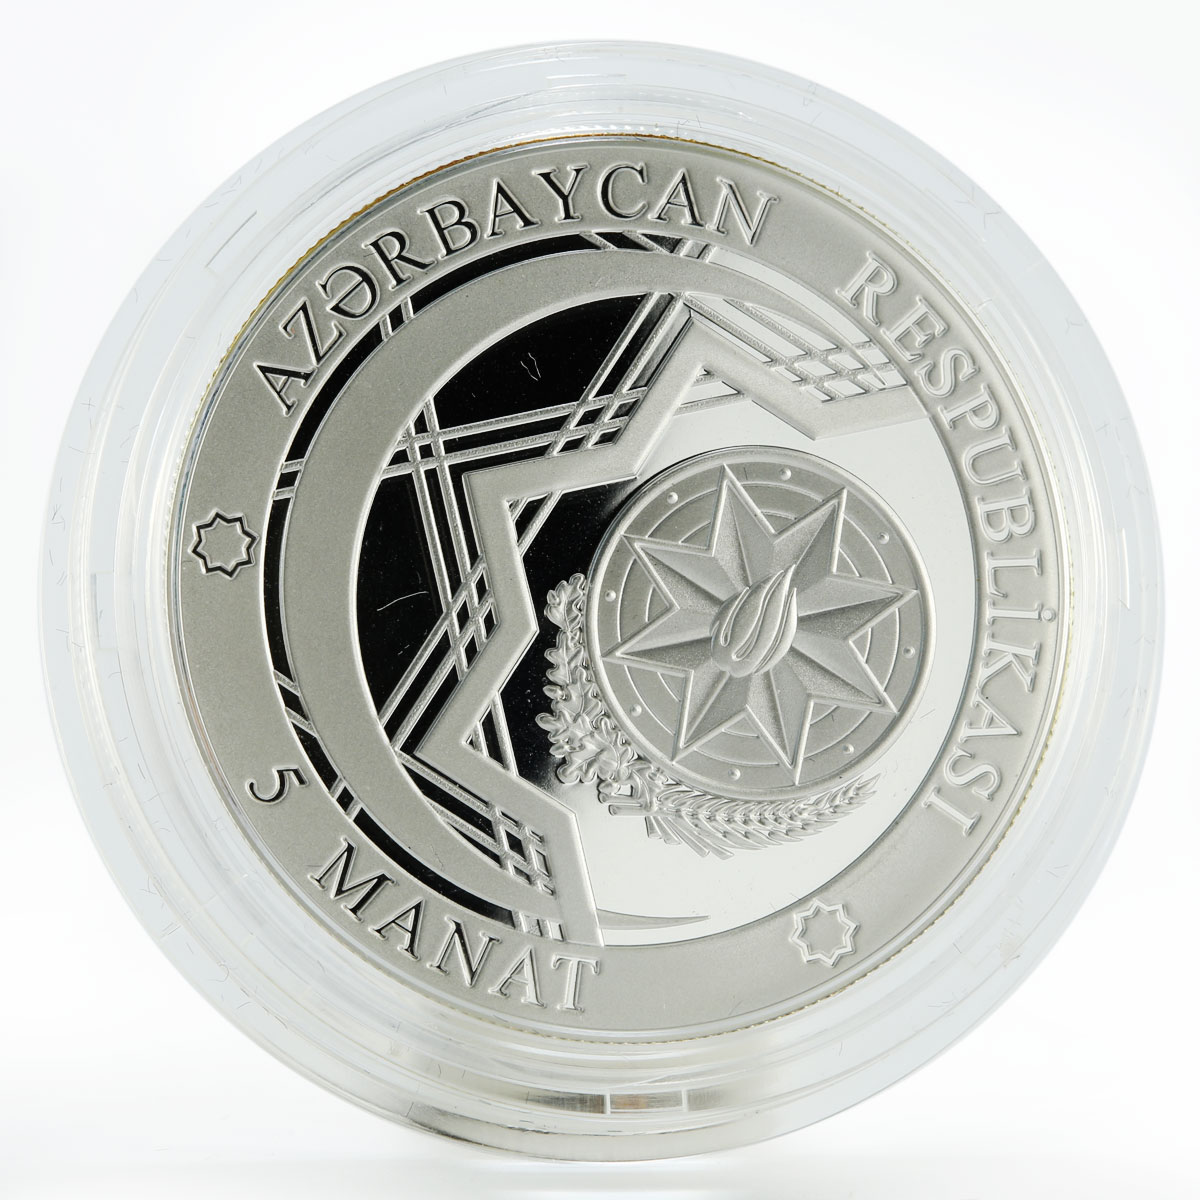 Azerbaijan 5 manat Satellite Azerspace-1 proof silver coin 2016